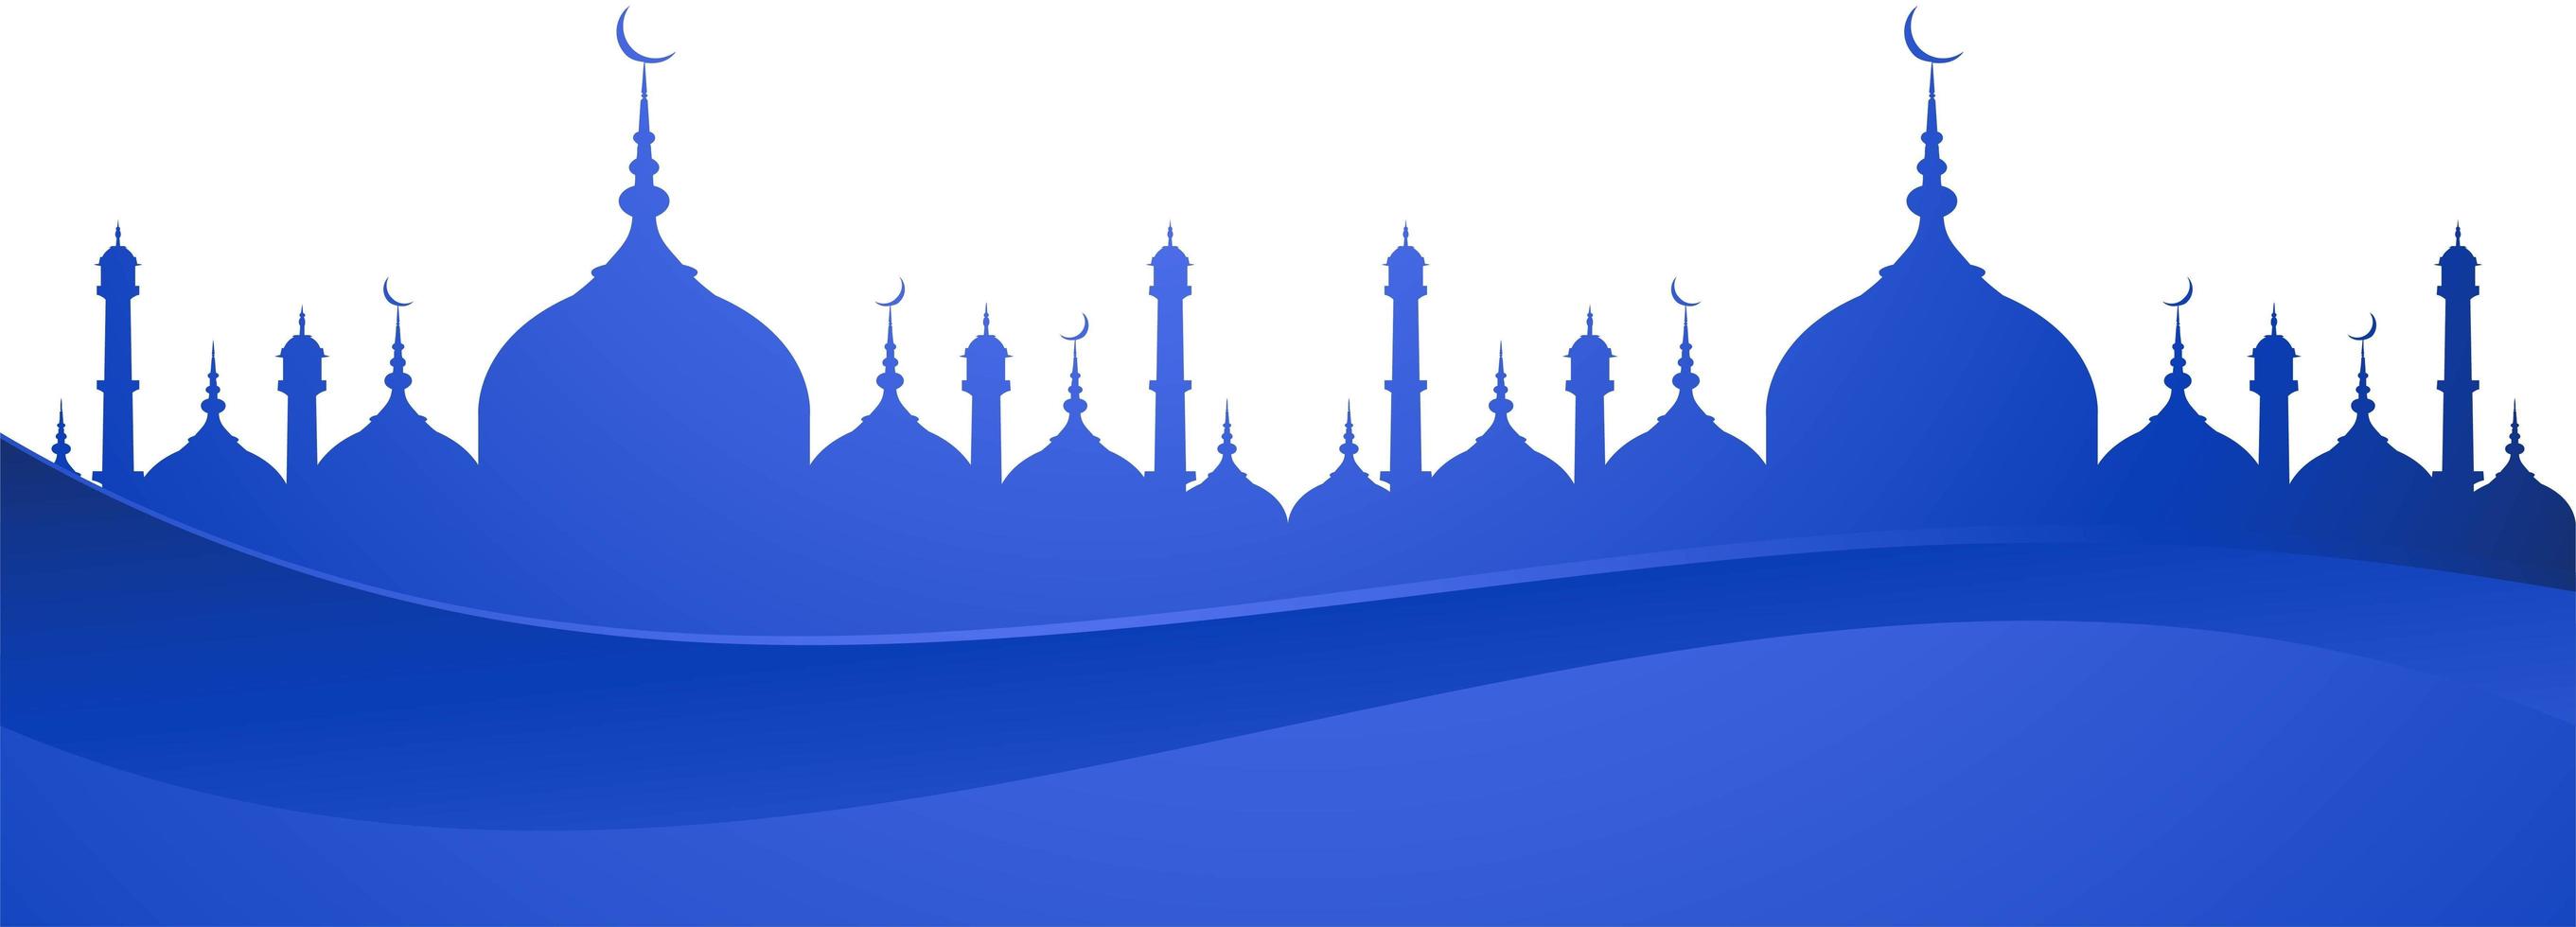 blauwe eid mubarak wenskaart met silhouet vector